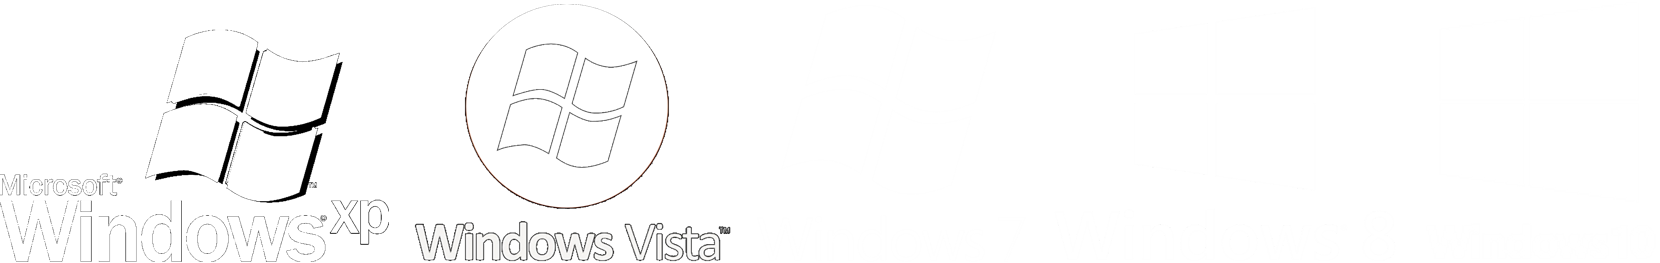 Compatibile con: Windows XP, Windows Vista, Windows 7, Windows 8, Windows 10